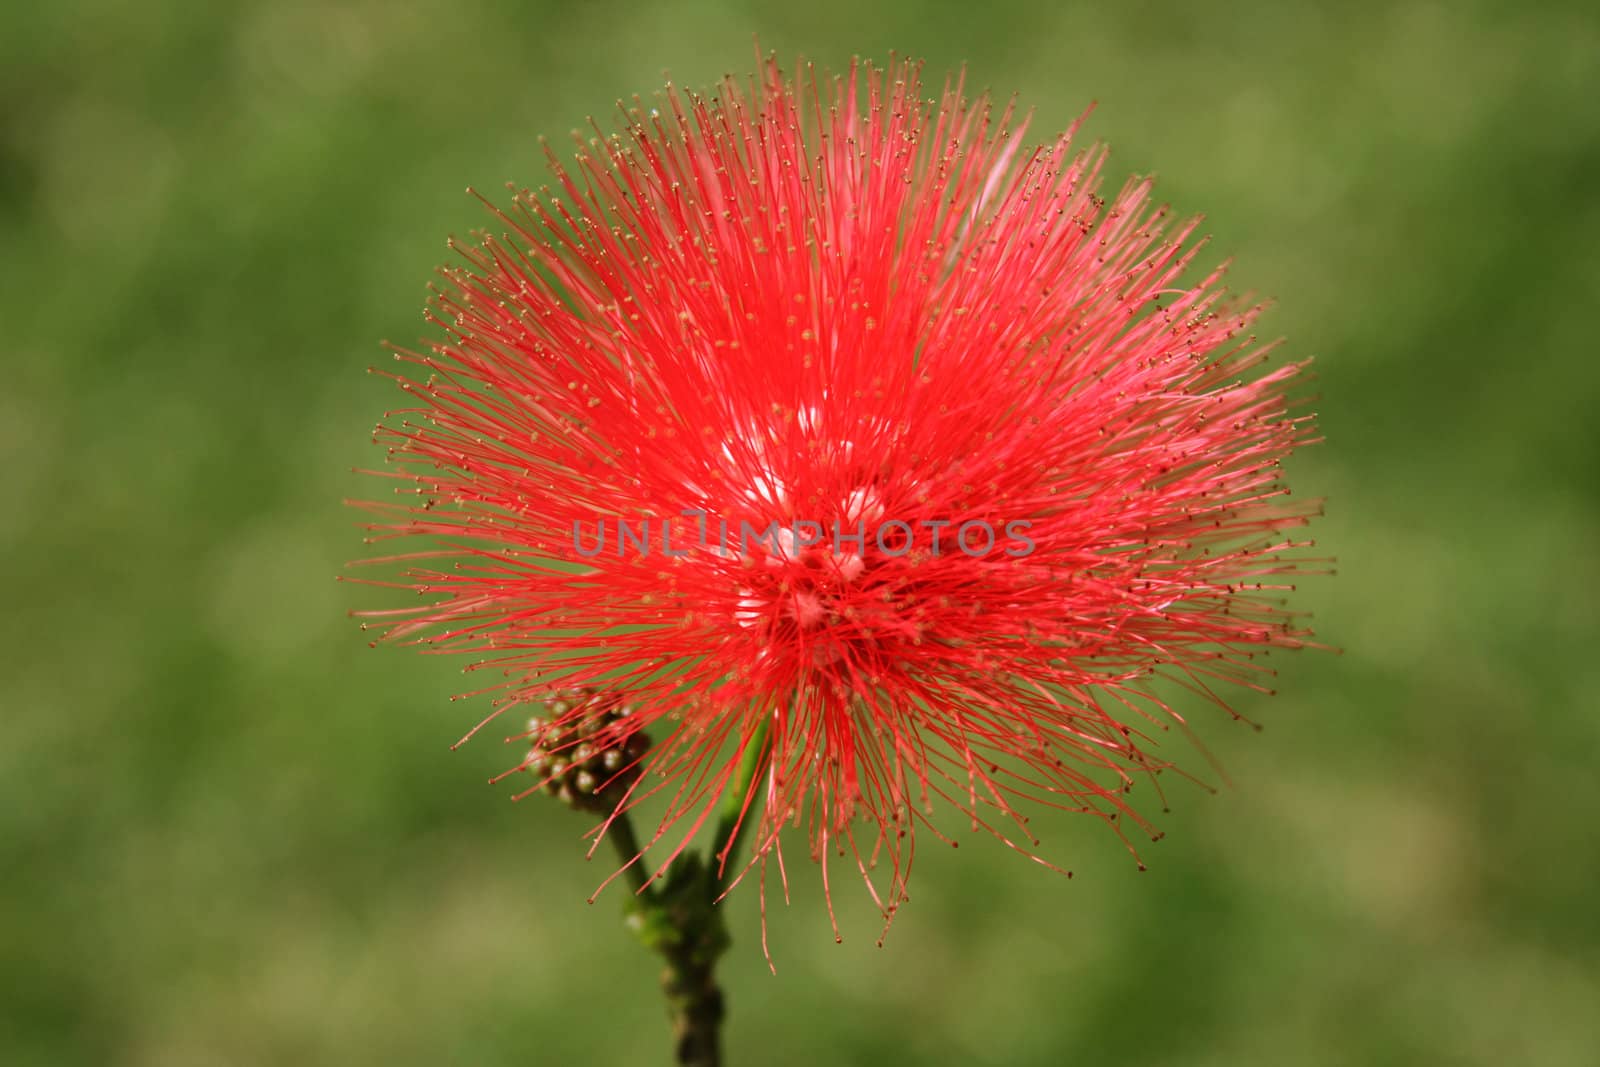 Red flower - Calliandra Haematocephala by LuBueno